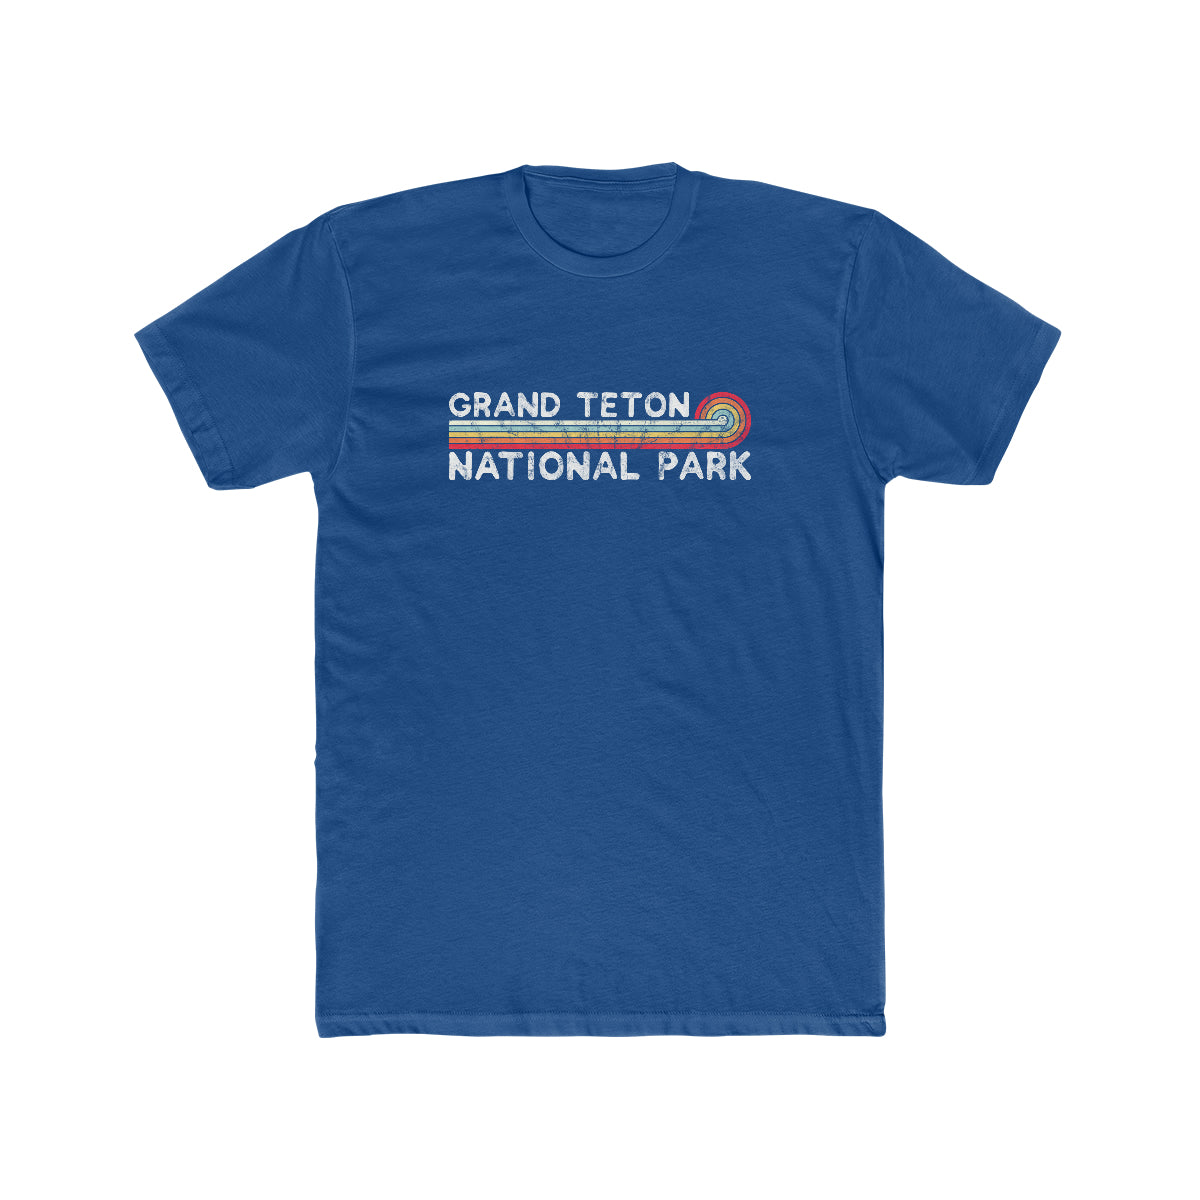 Grand Teton National Park T-Shirt - Vintage Stretched Sunrise